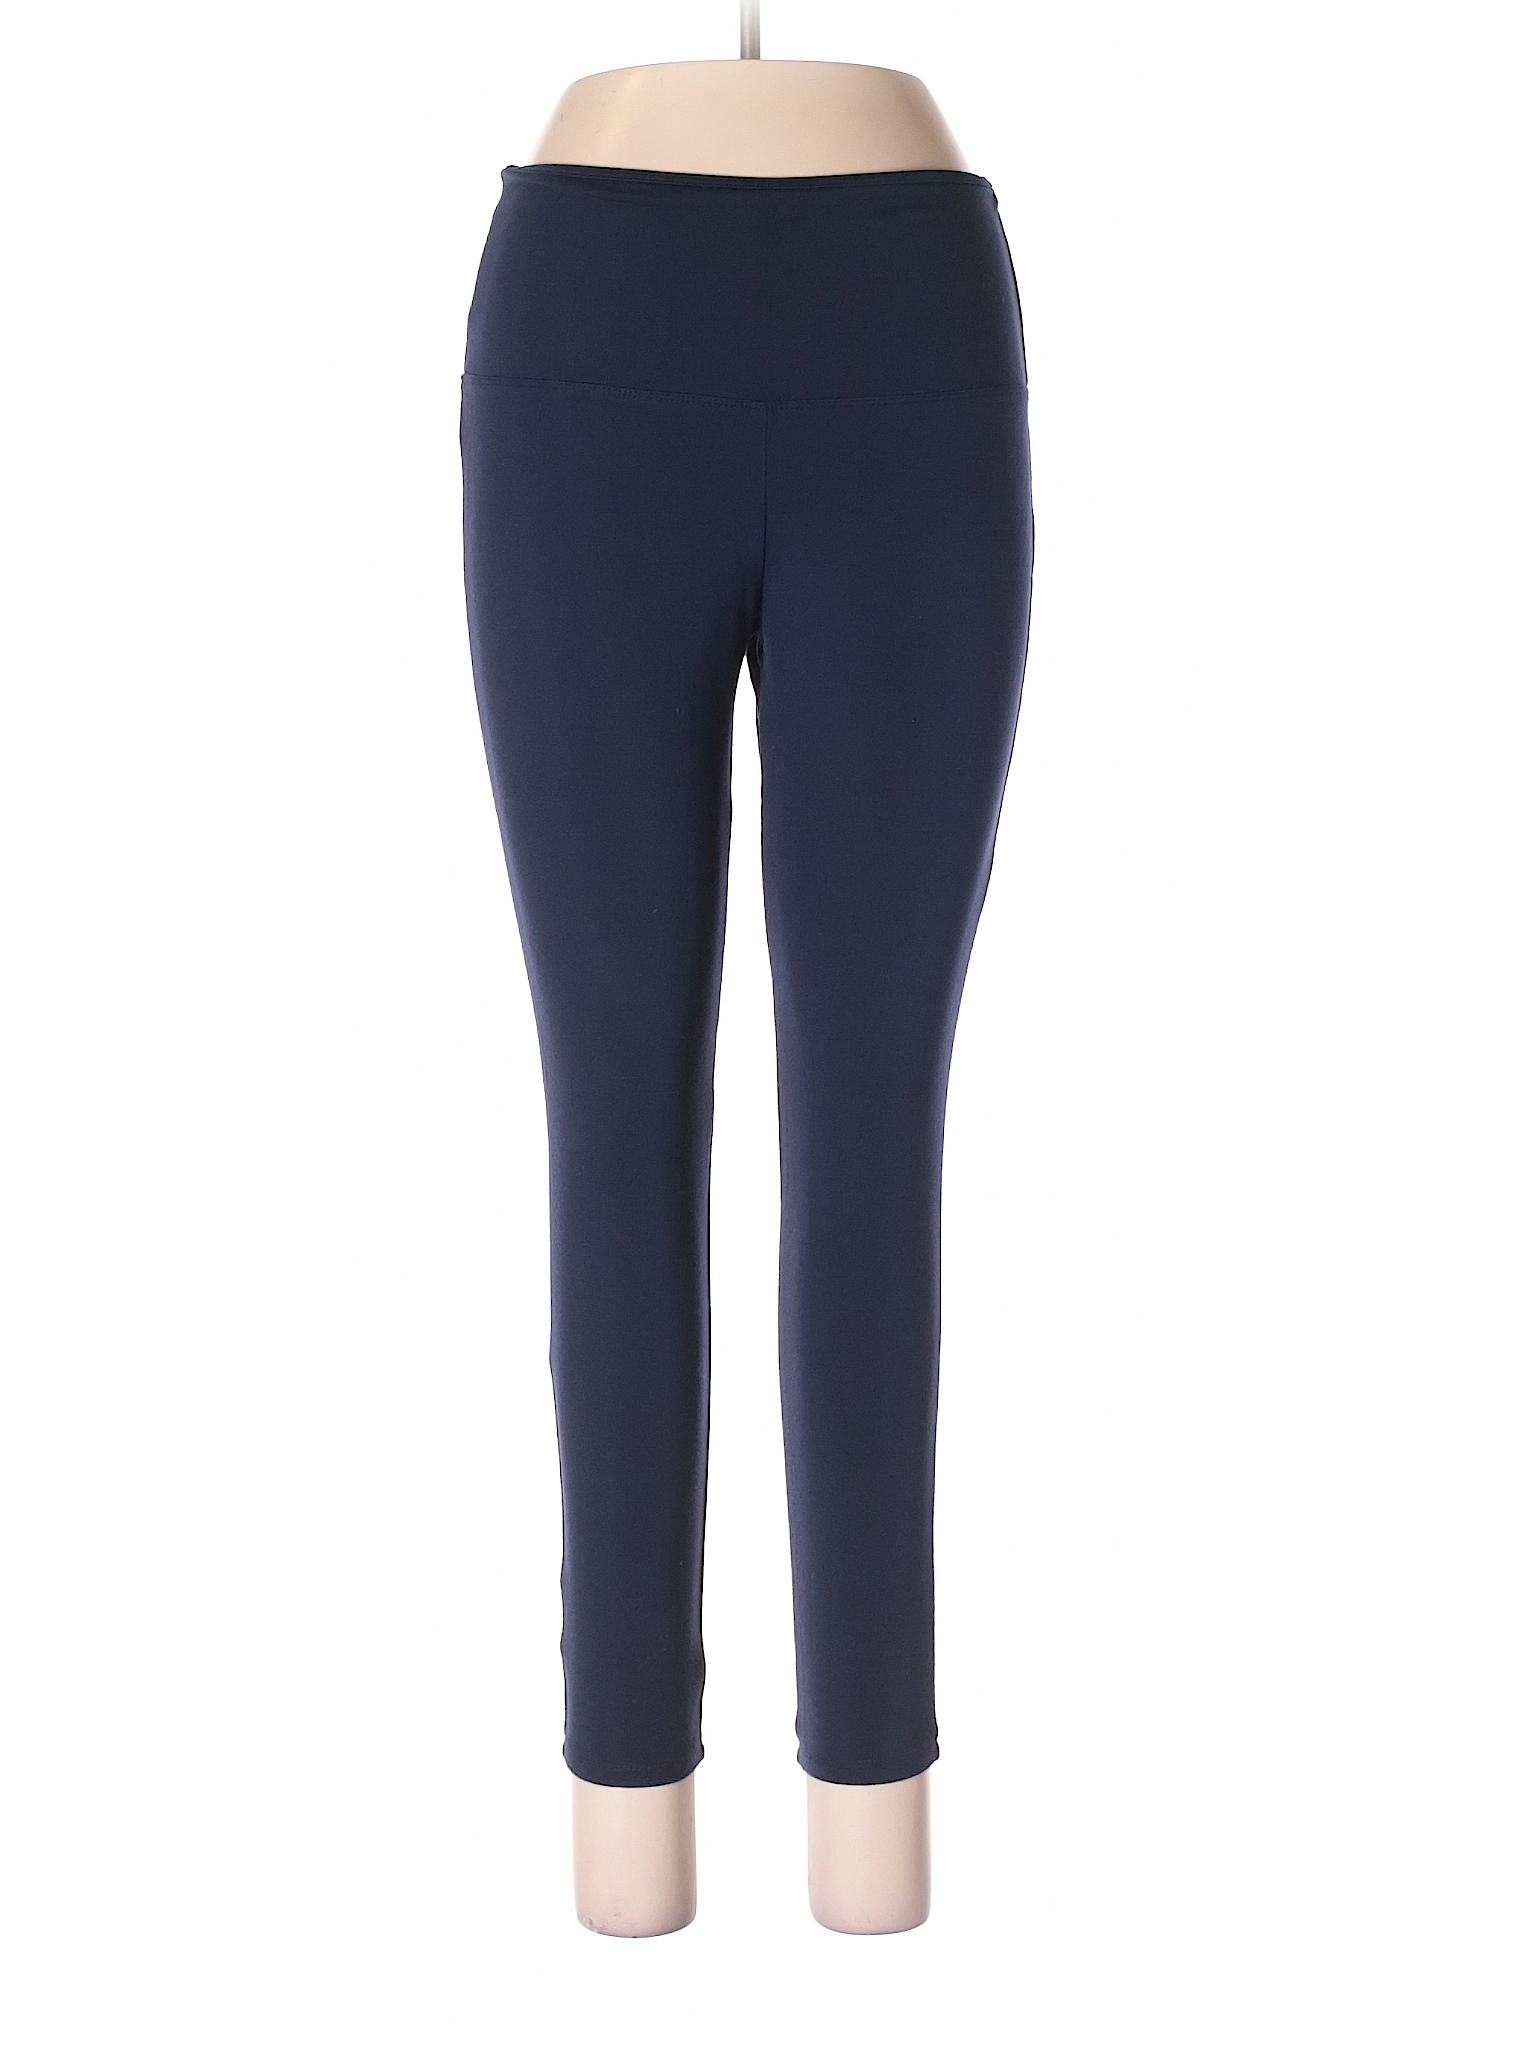 Athena Marie Solid Dark Blue Active Pants Size L - 74% off | thredUP